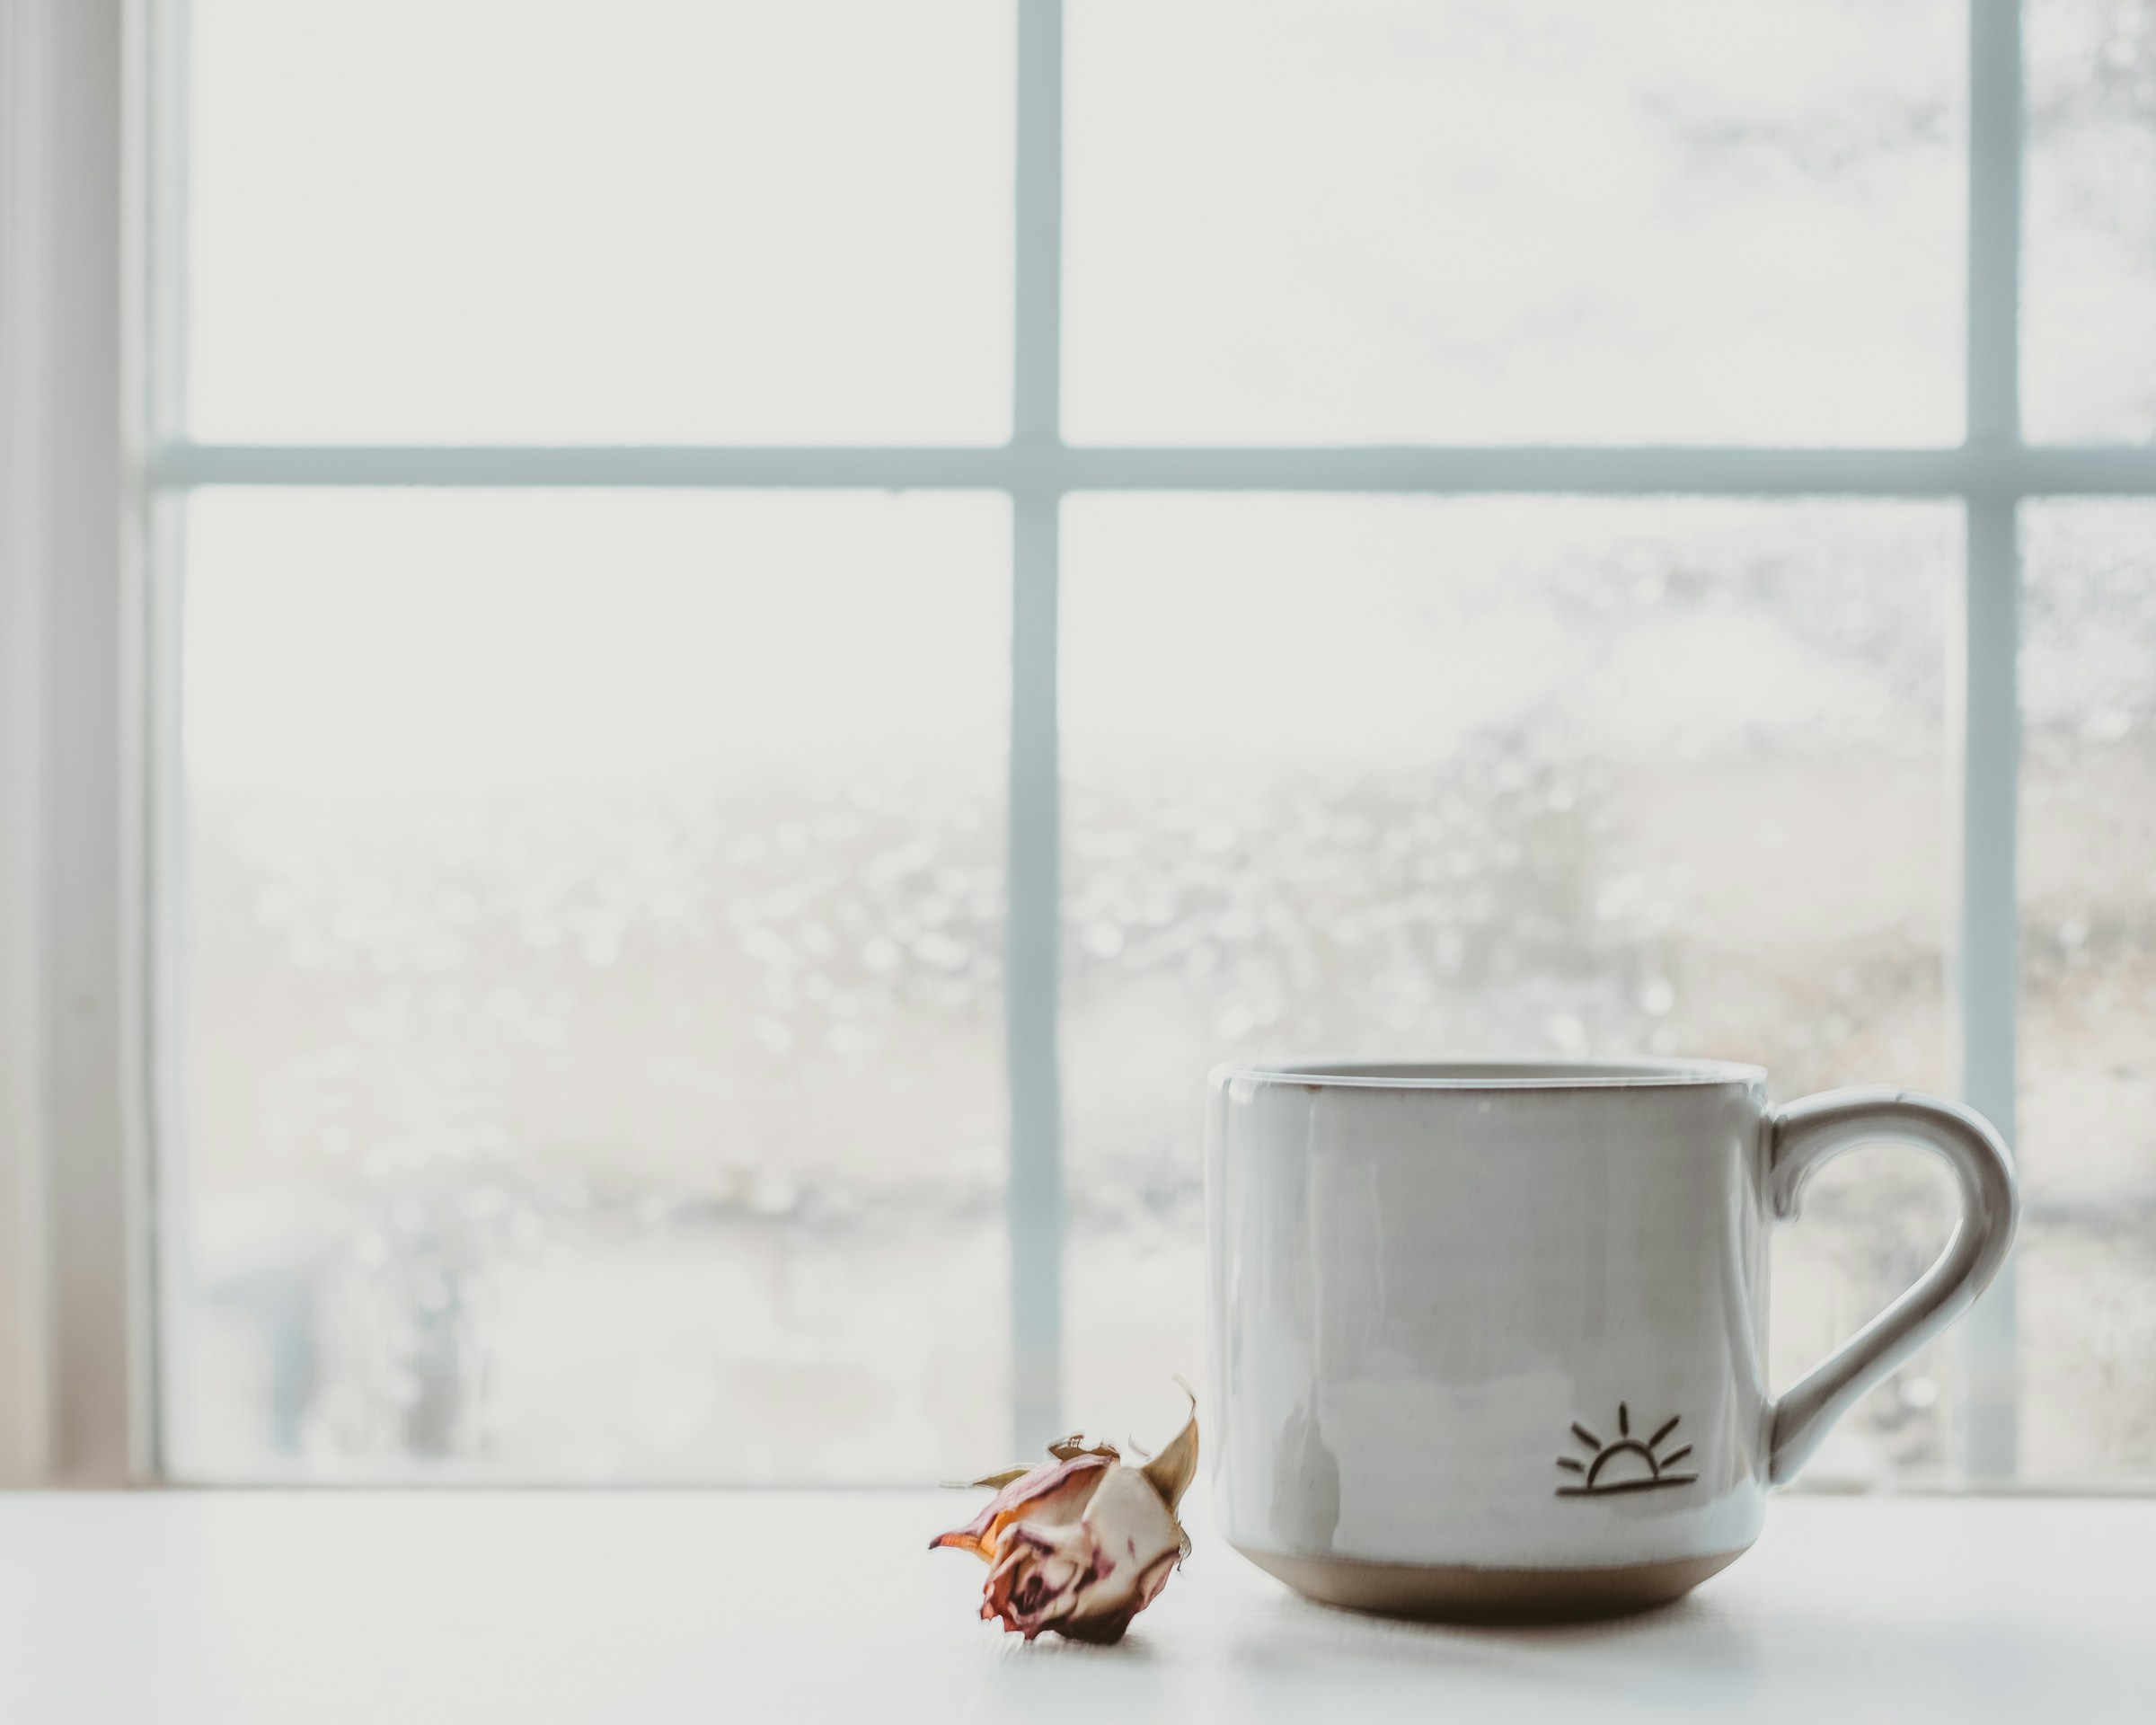 A rainy morning with a white mug | Source: Unsplash